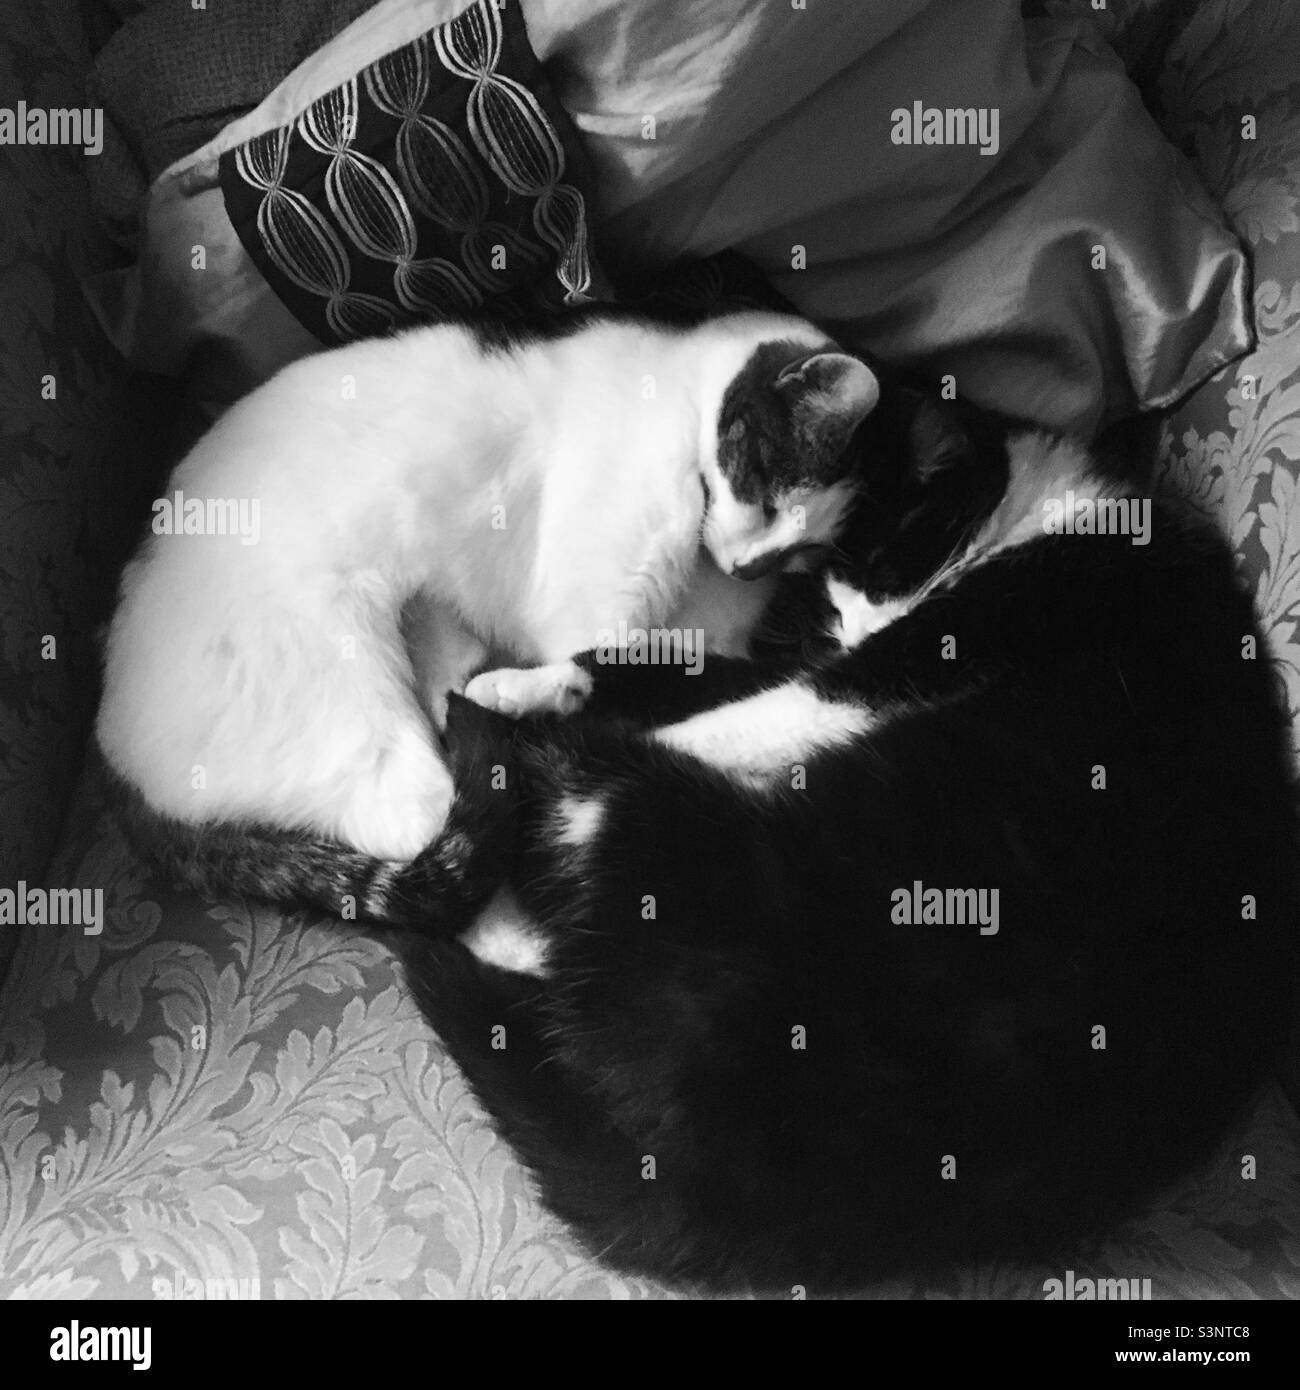 Cat cuddle Stock Photo